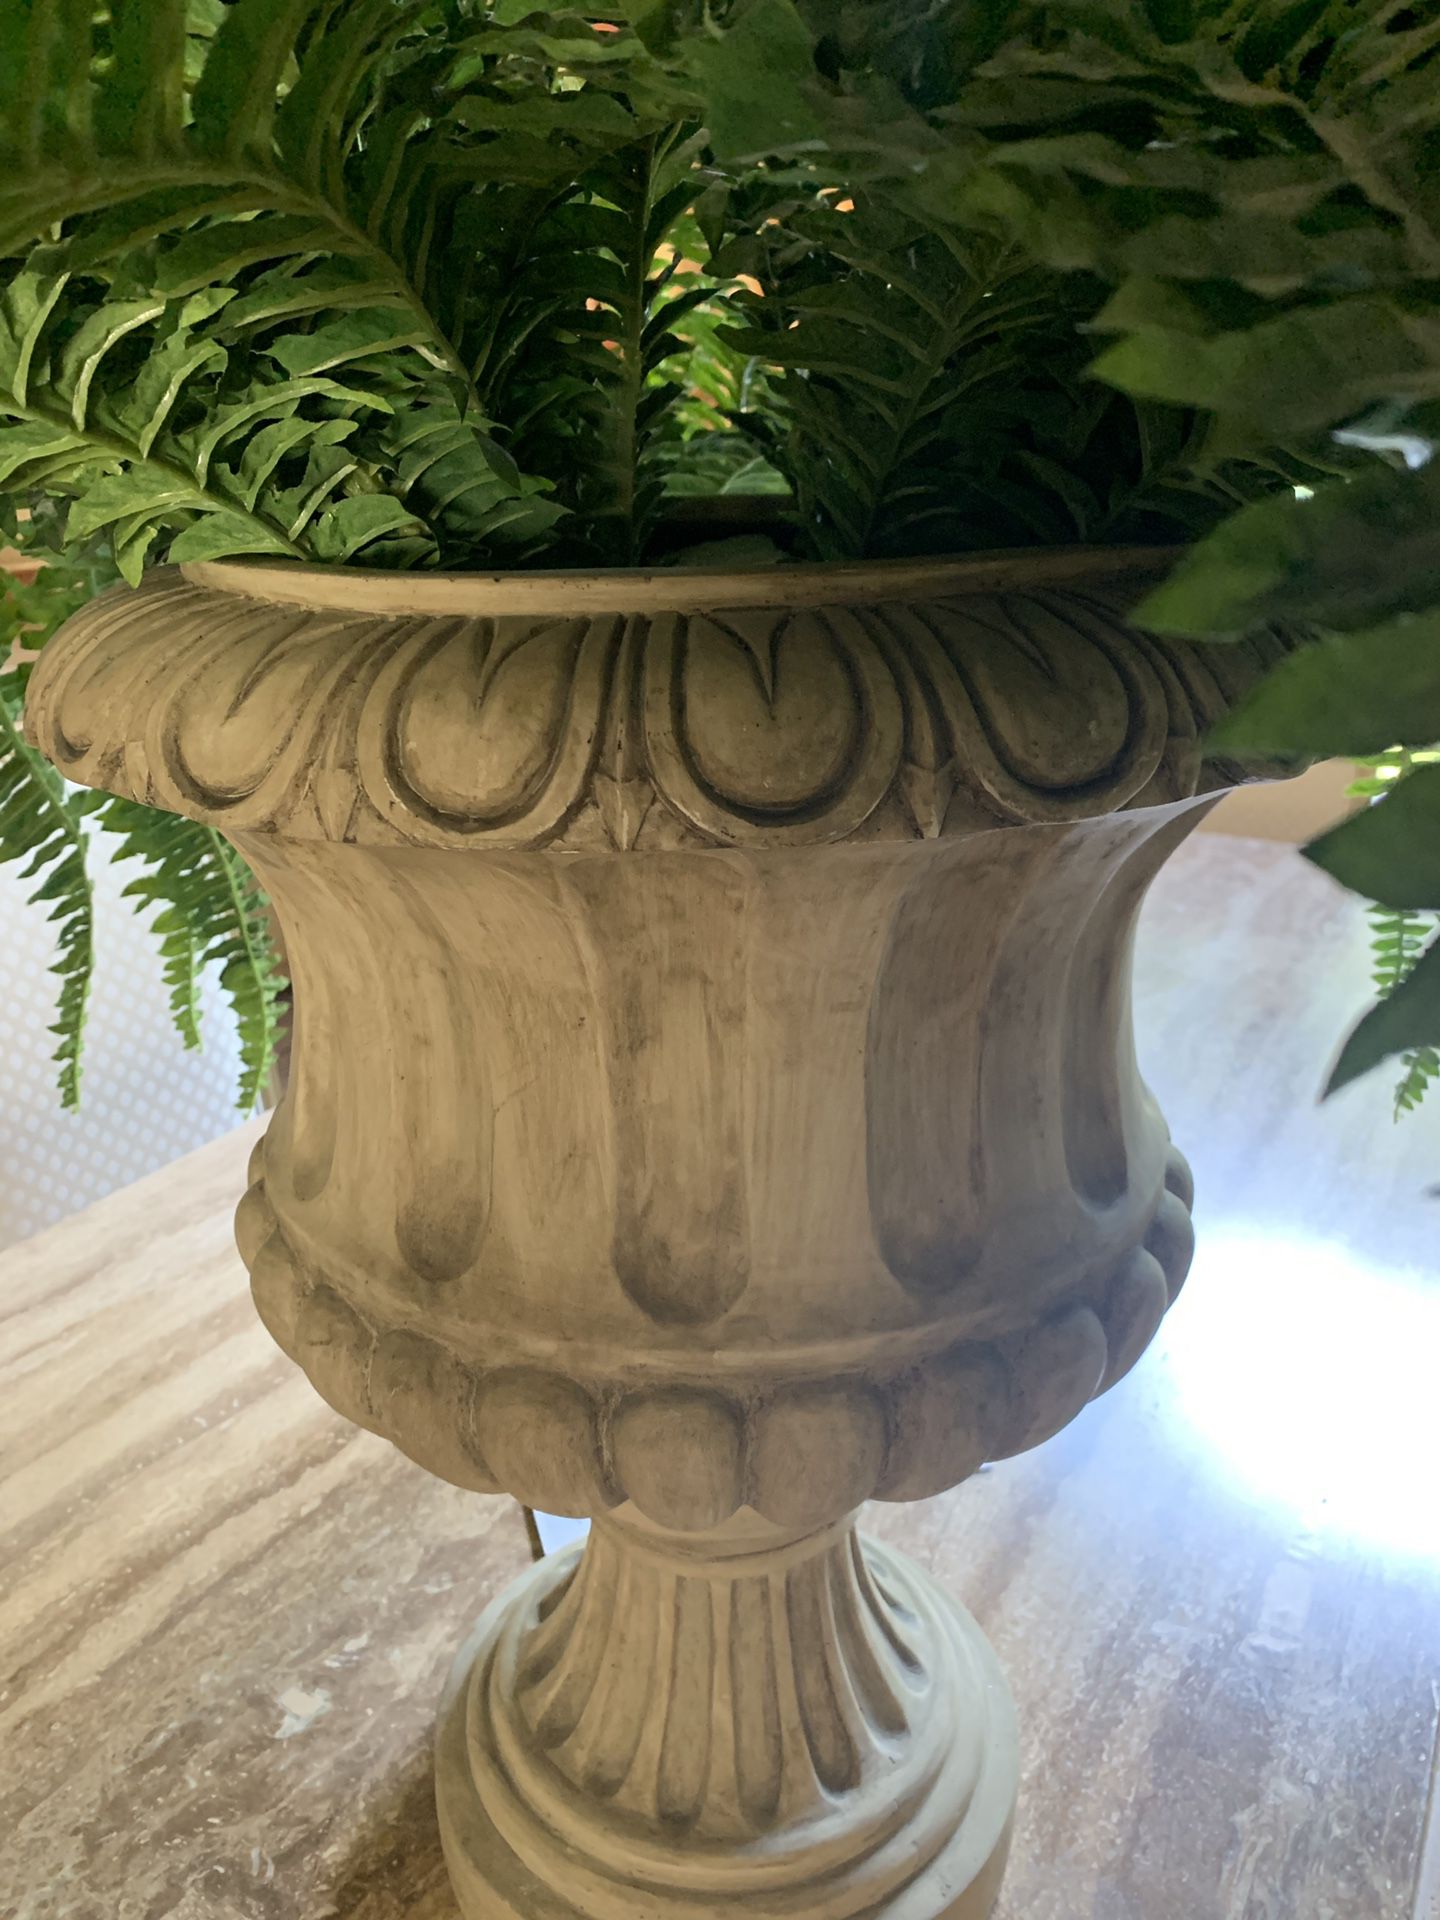 Beautiful outdoor or indoor planter with beautiful vintage looking vase